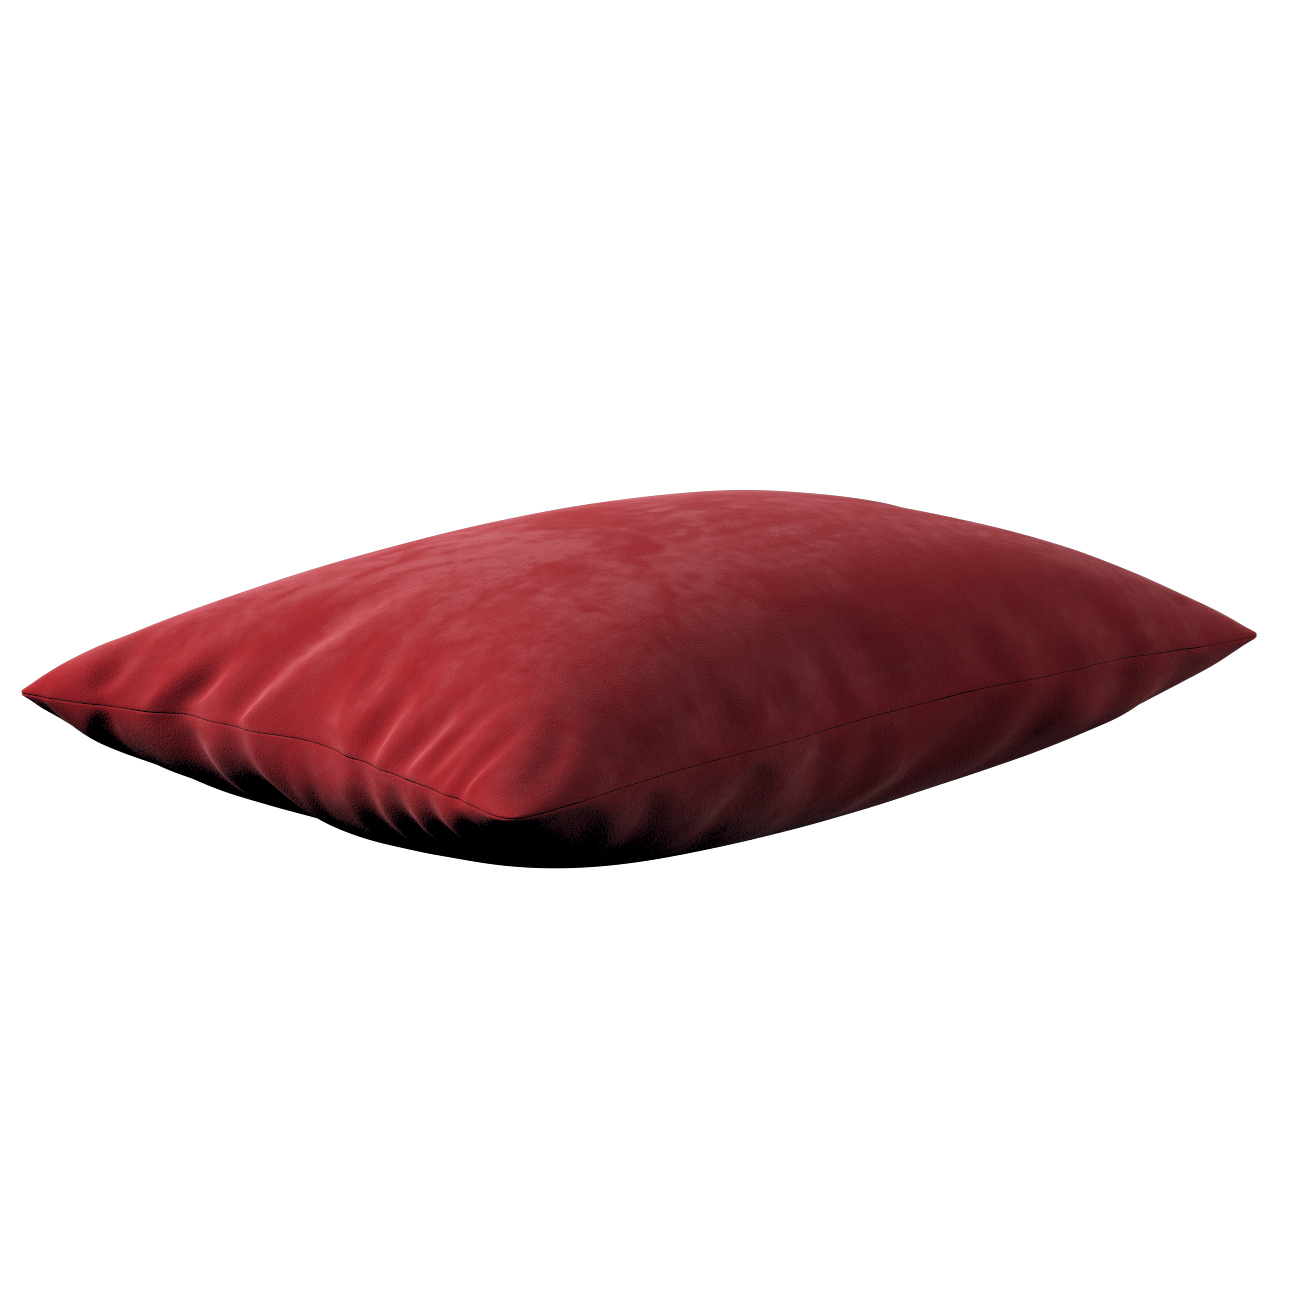 Kissenhülle Kinga rechteckig, rot, 60 x 40 cm, Velvet (704-15) günstig online kaufen